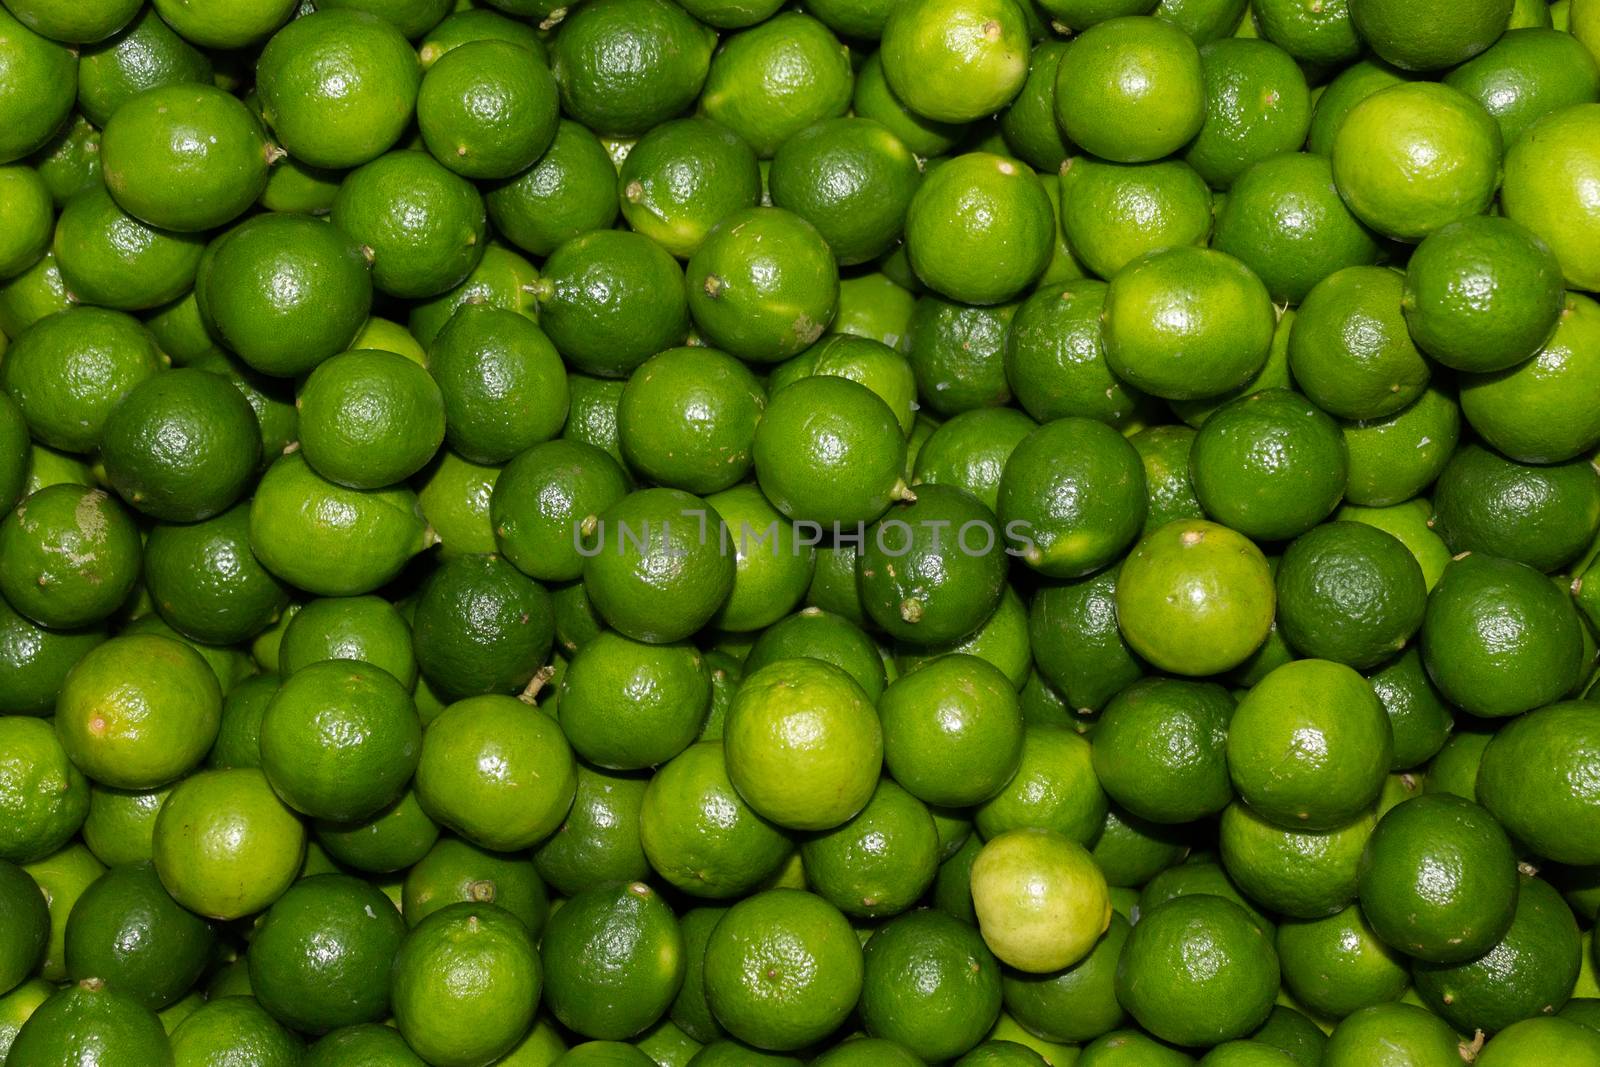 Fresh green lemons. textures and backgrounds by leo_de_la_garza